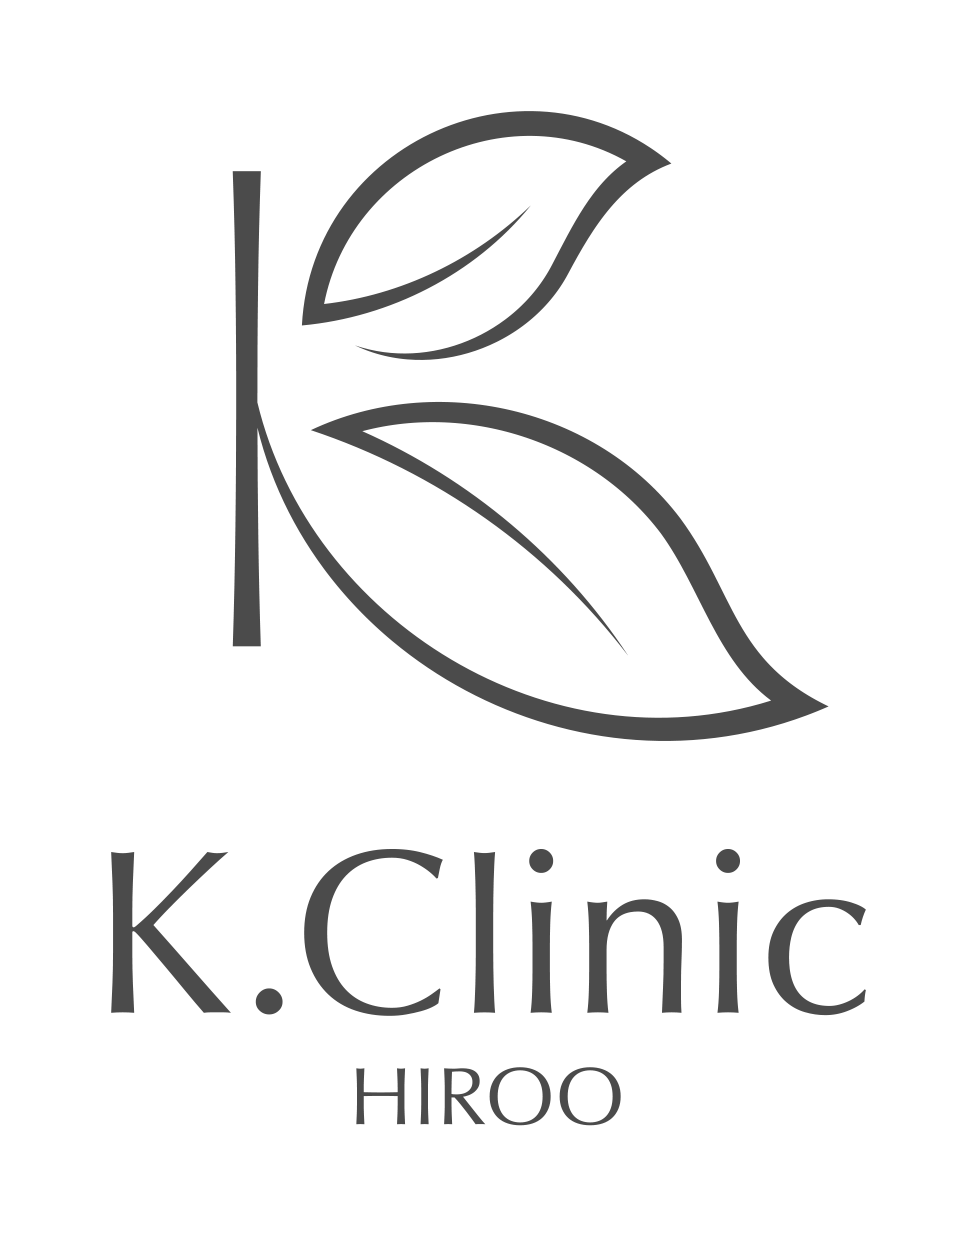 K.Clinic HIROO